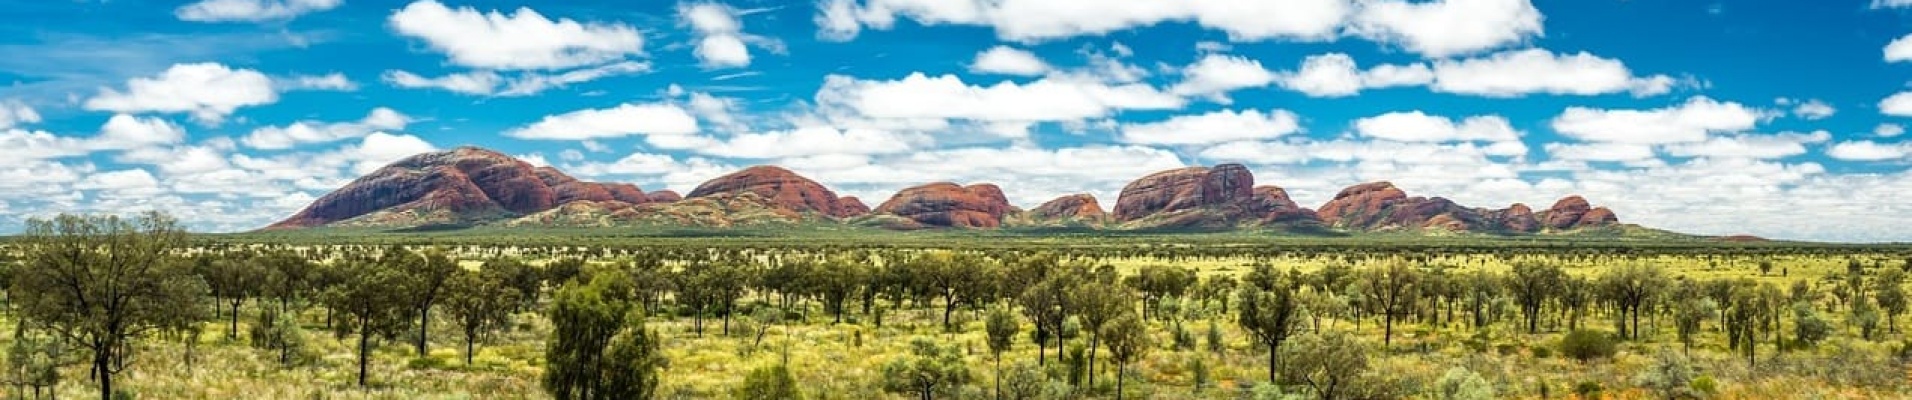 outback-australien